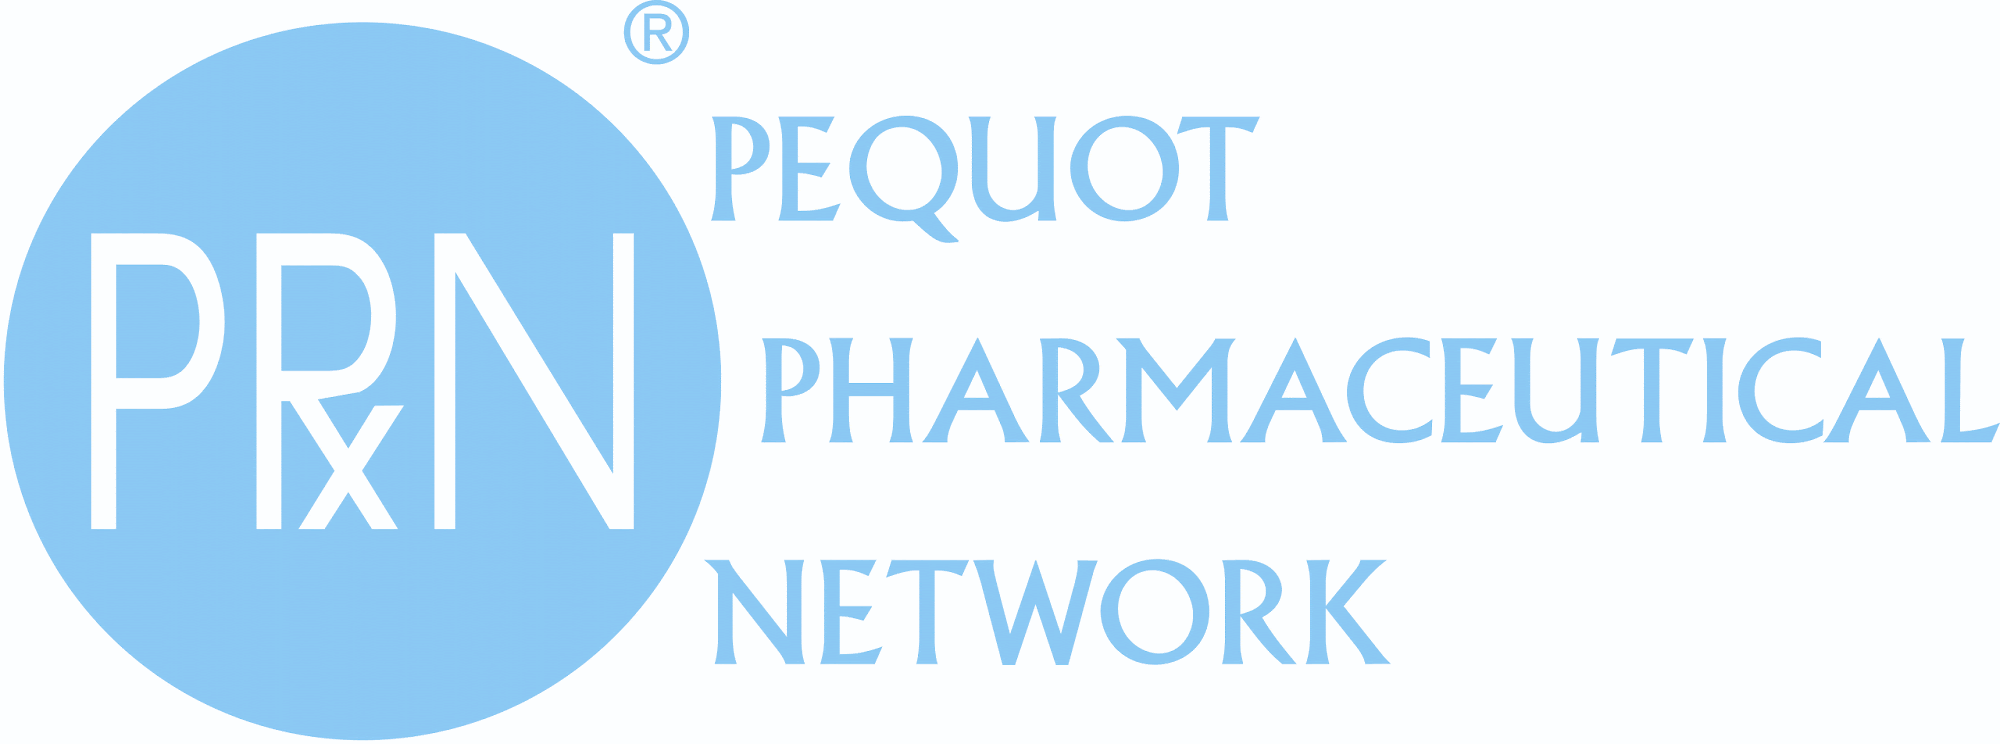 Pequot Pharmaceutical Network